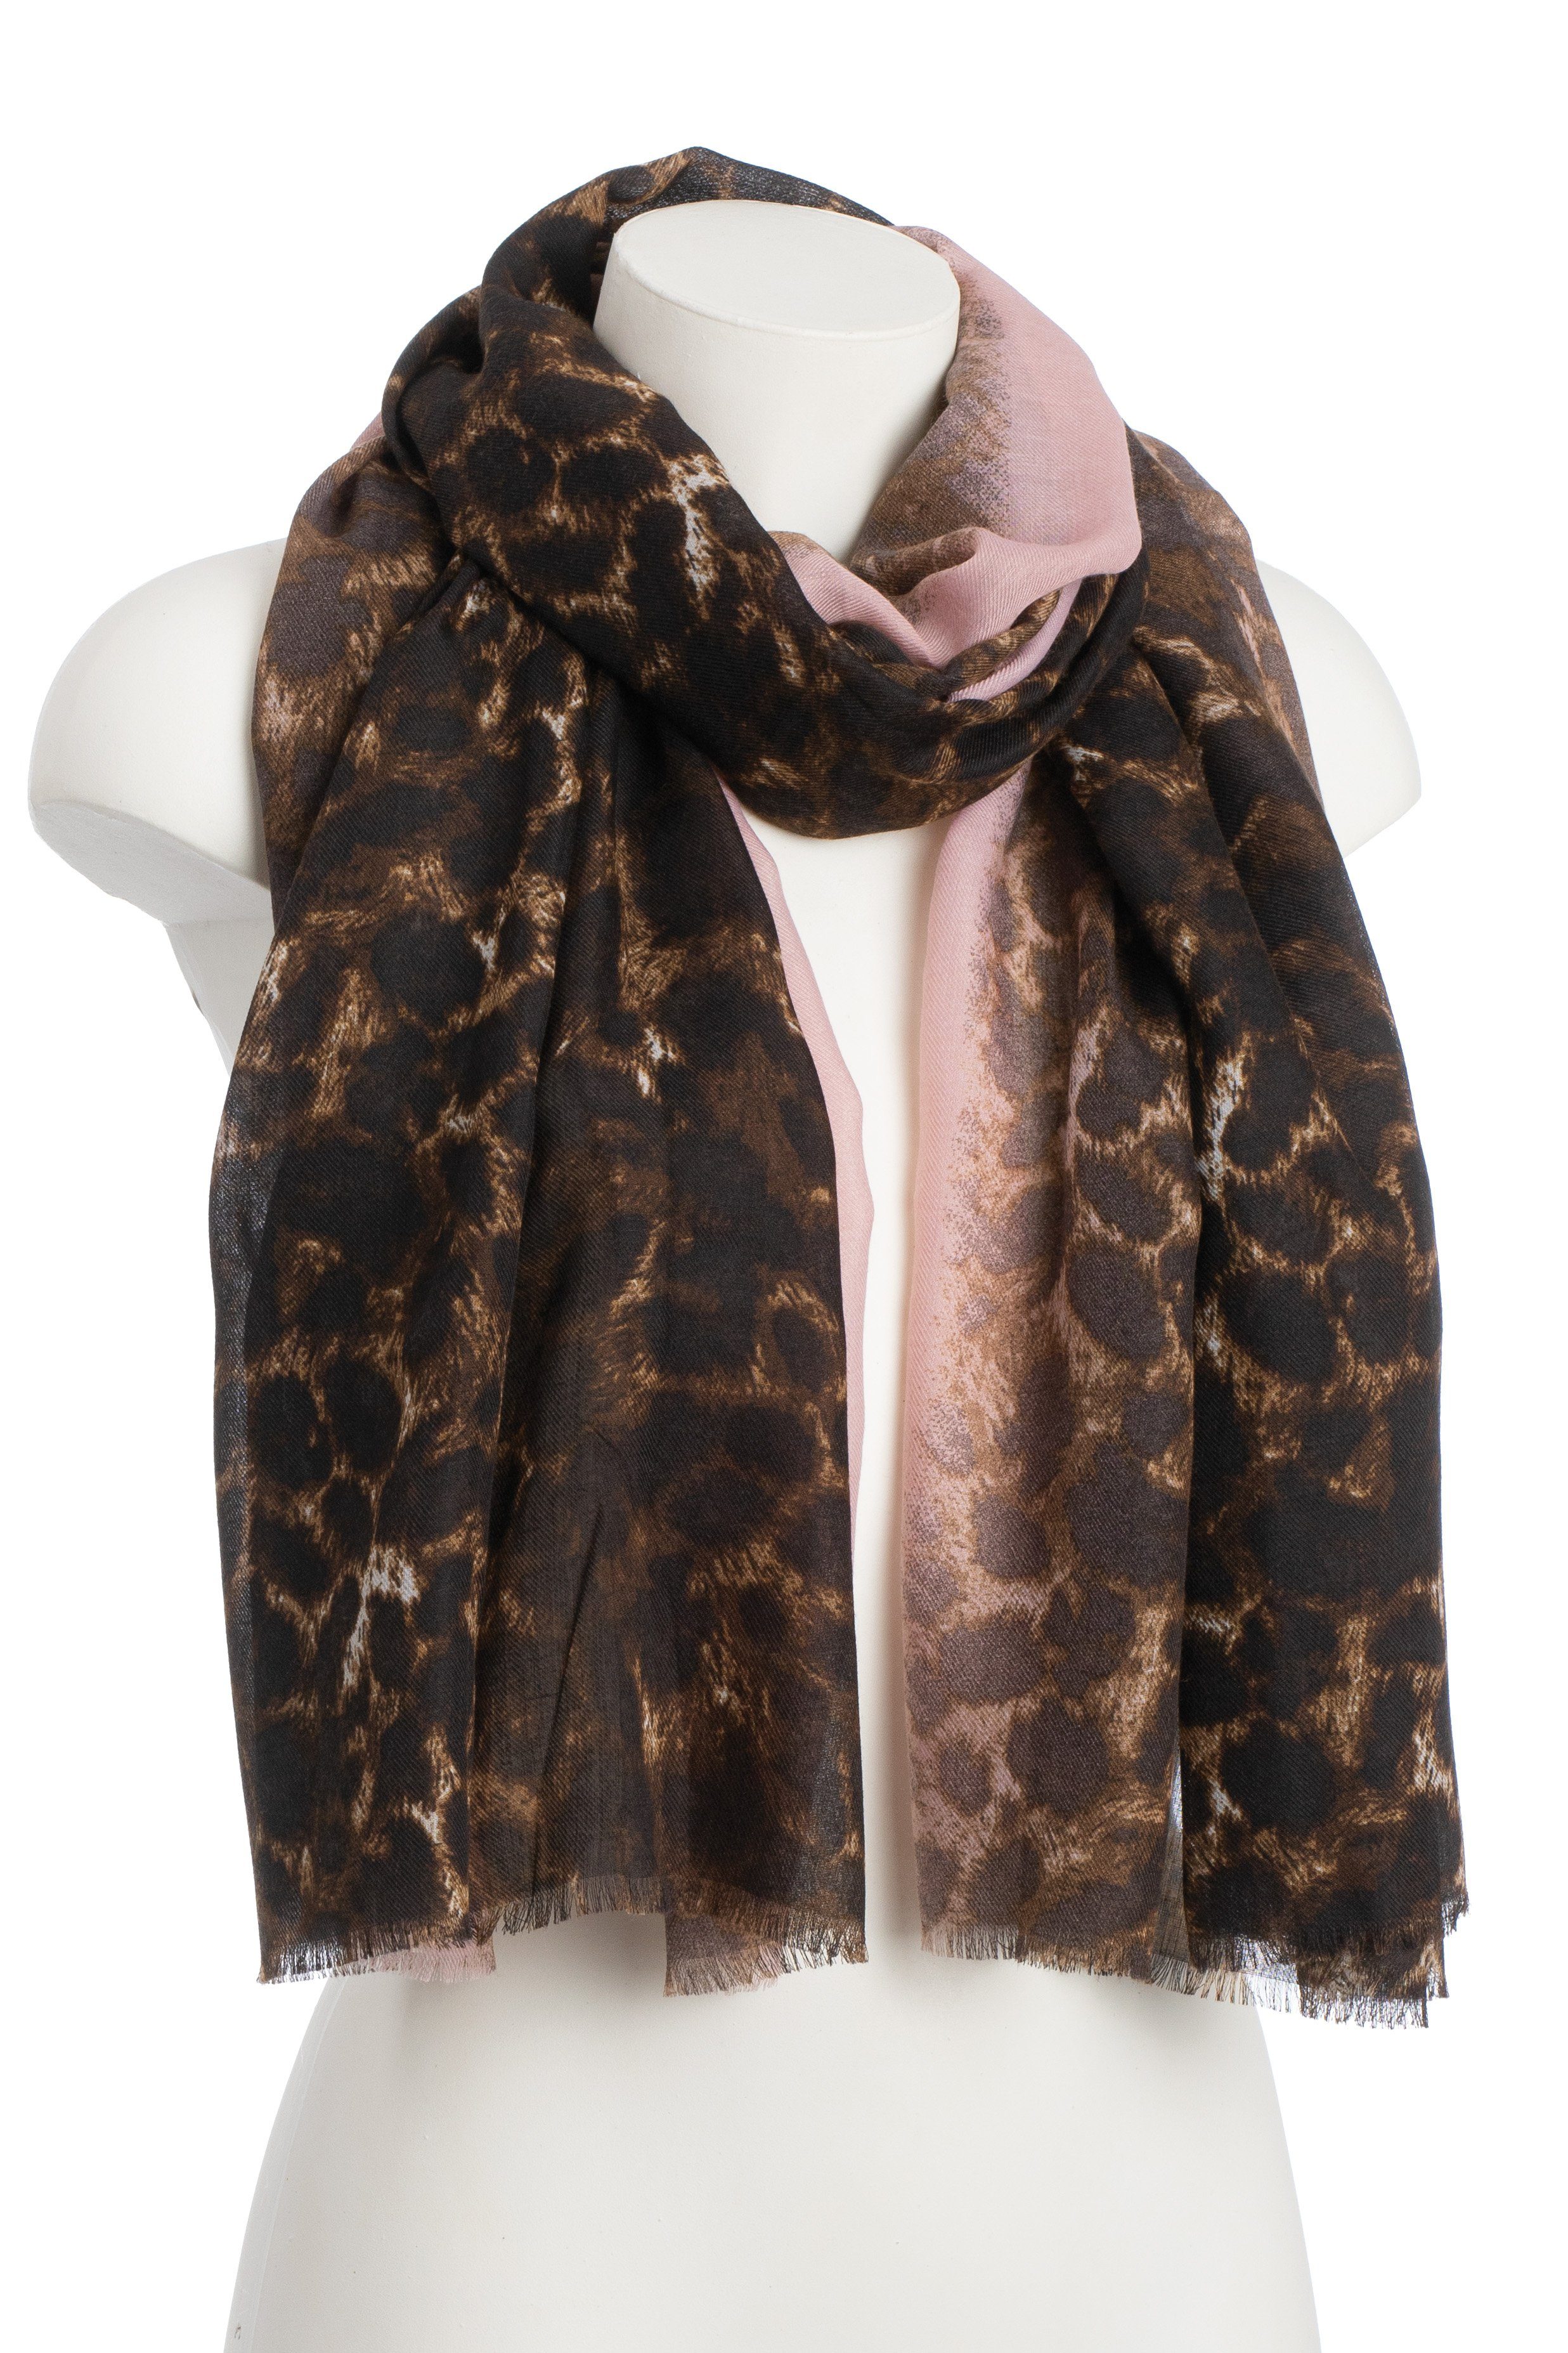 Goodman Design Modeschal Schal Leo mit tollem Animalprint, angenehmer Tragekomfort Rosa